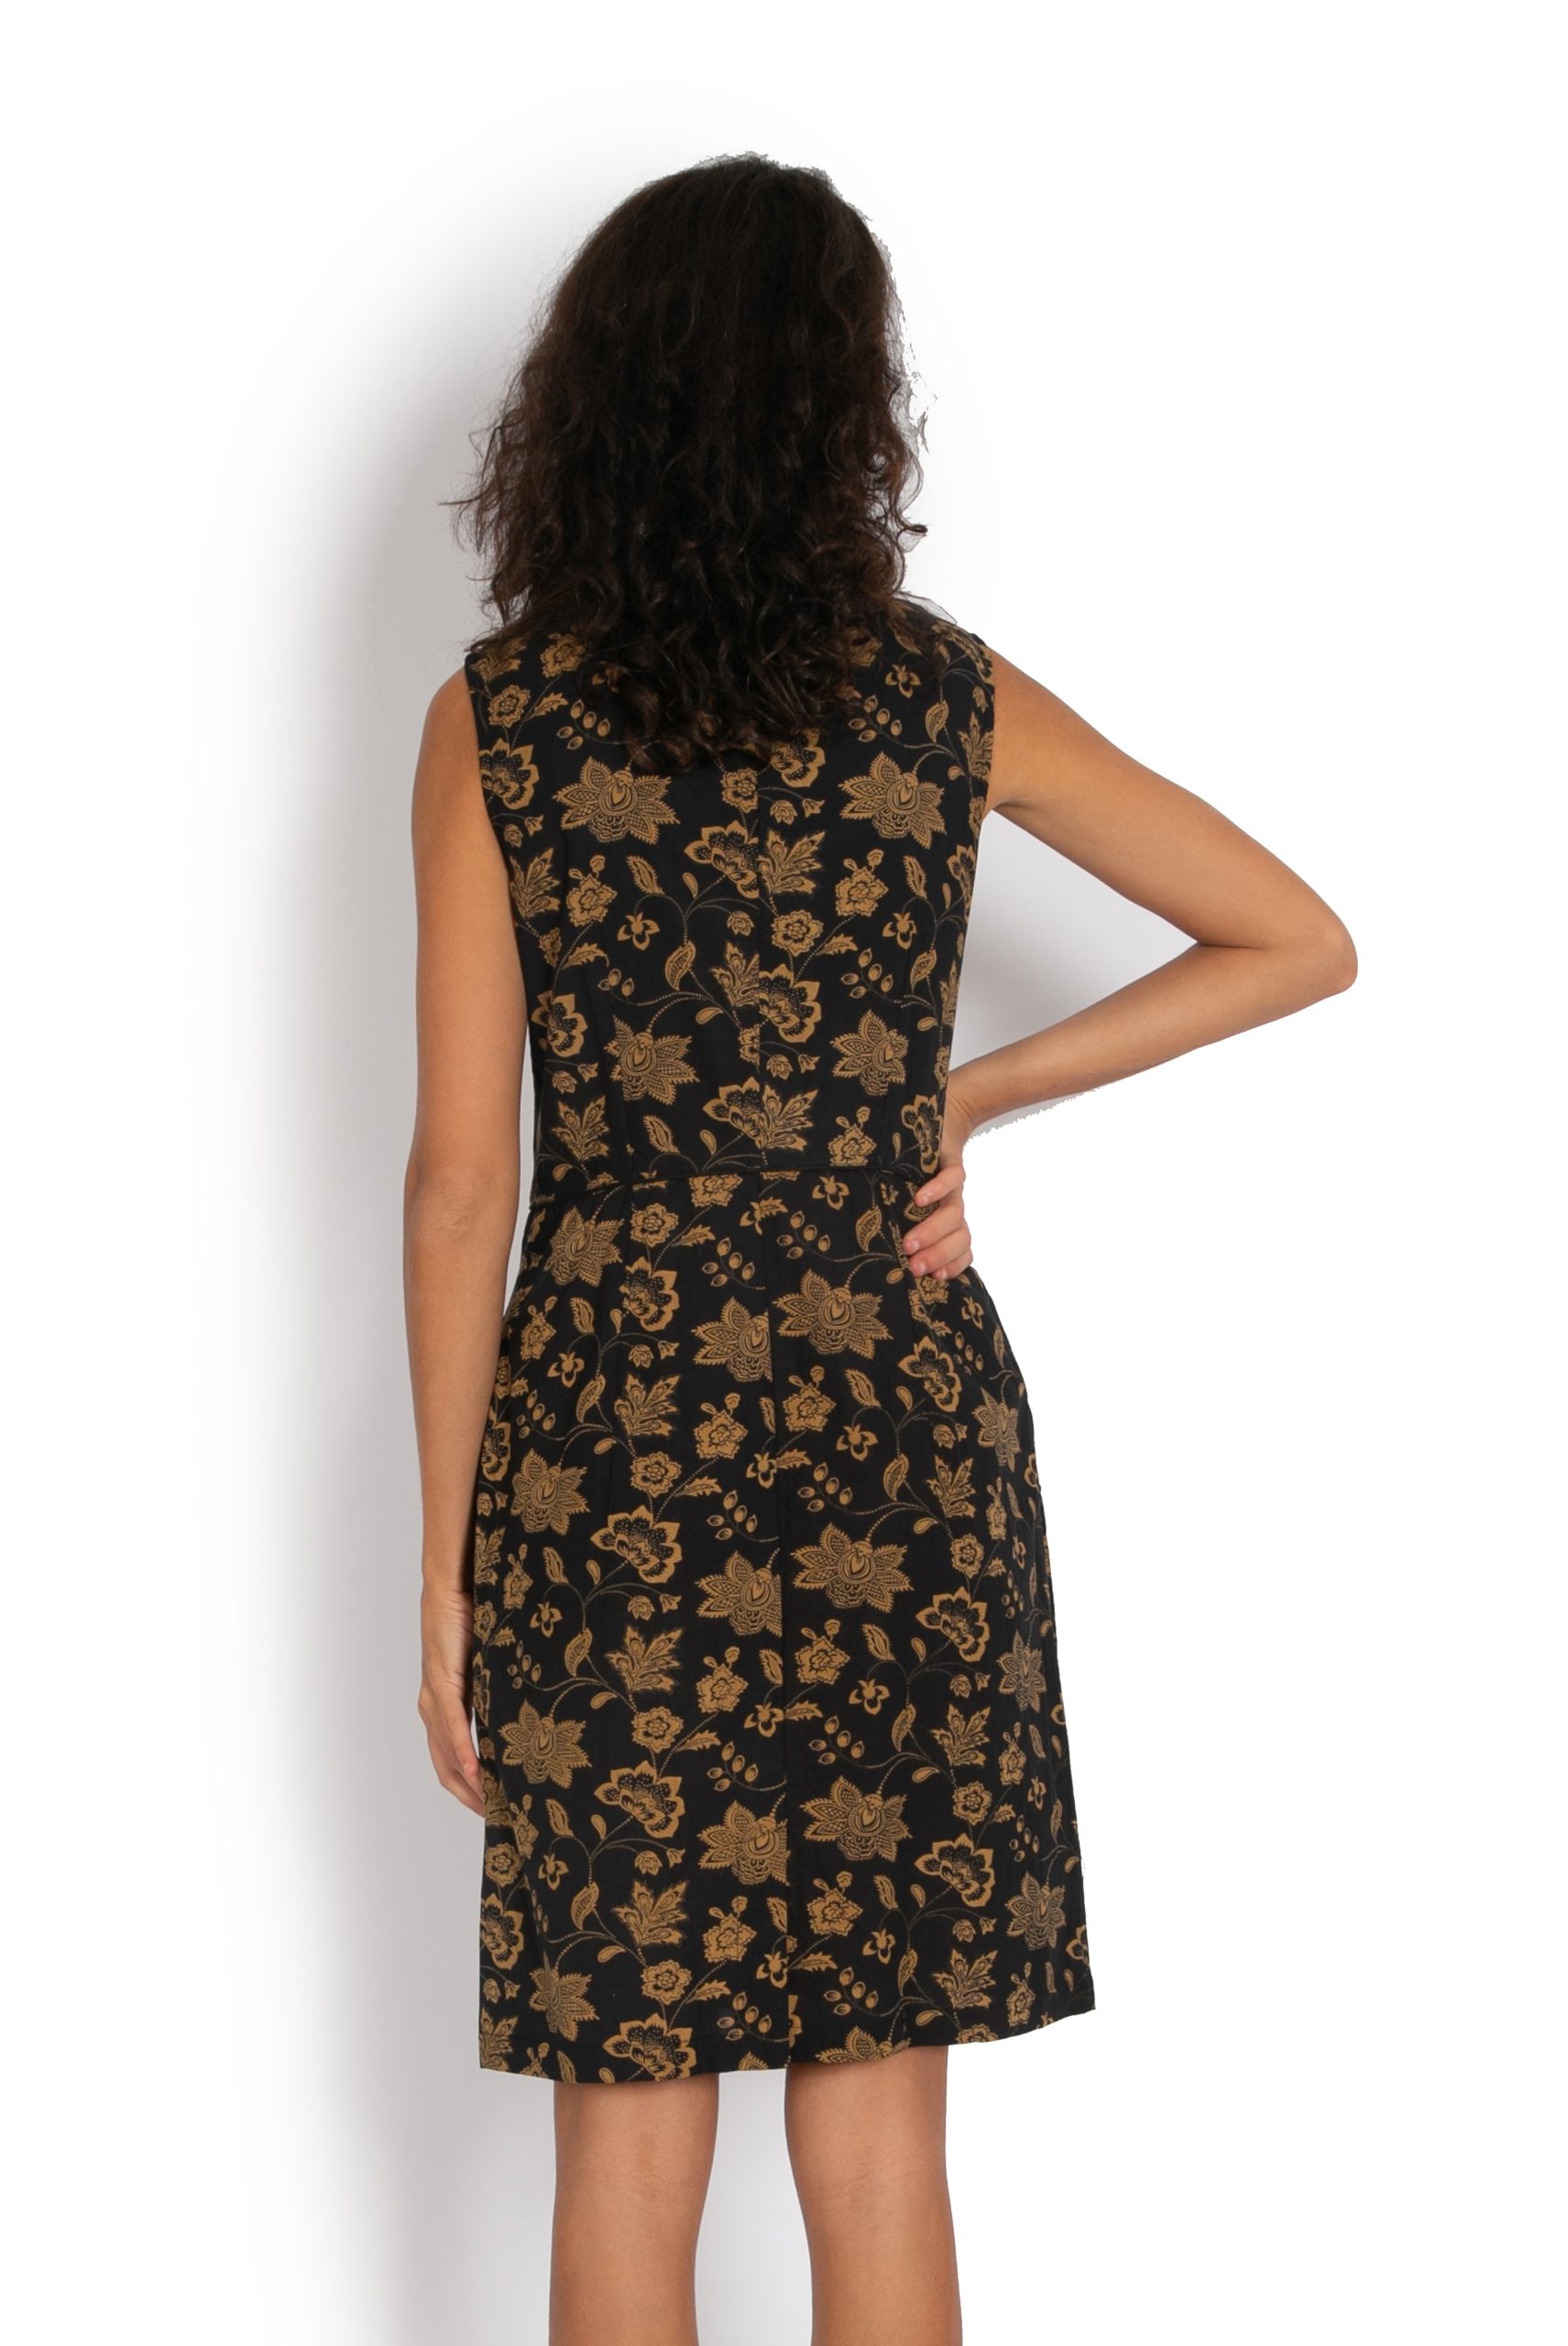 Sydney Dress - Indo Black - OM Designs